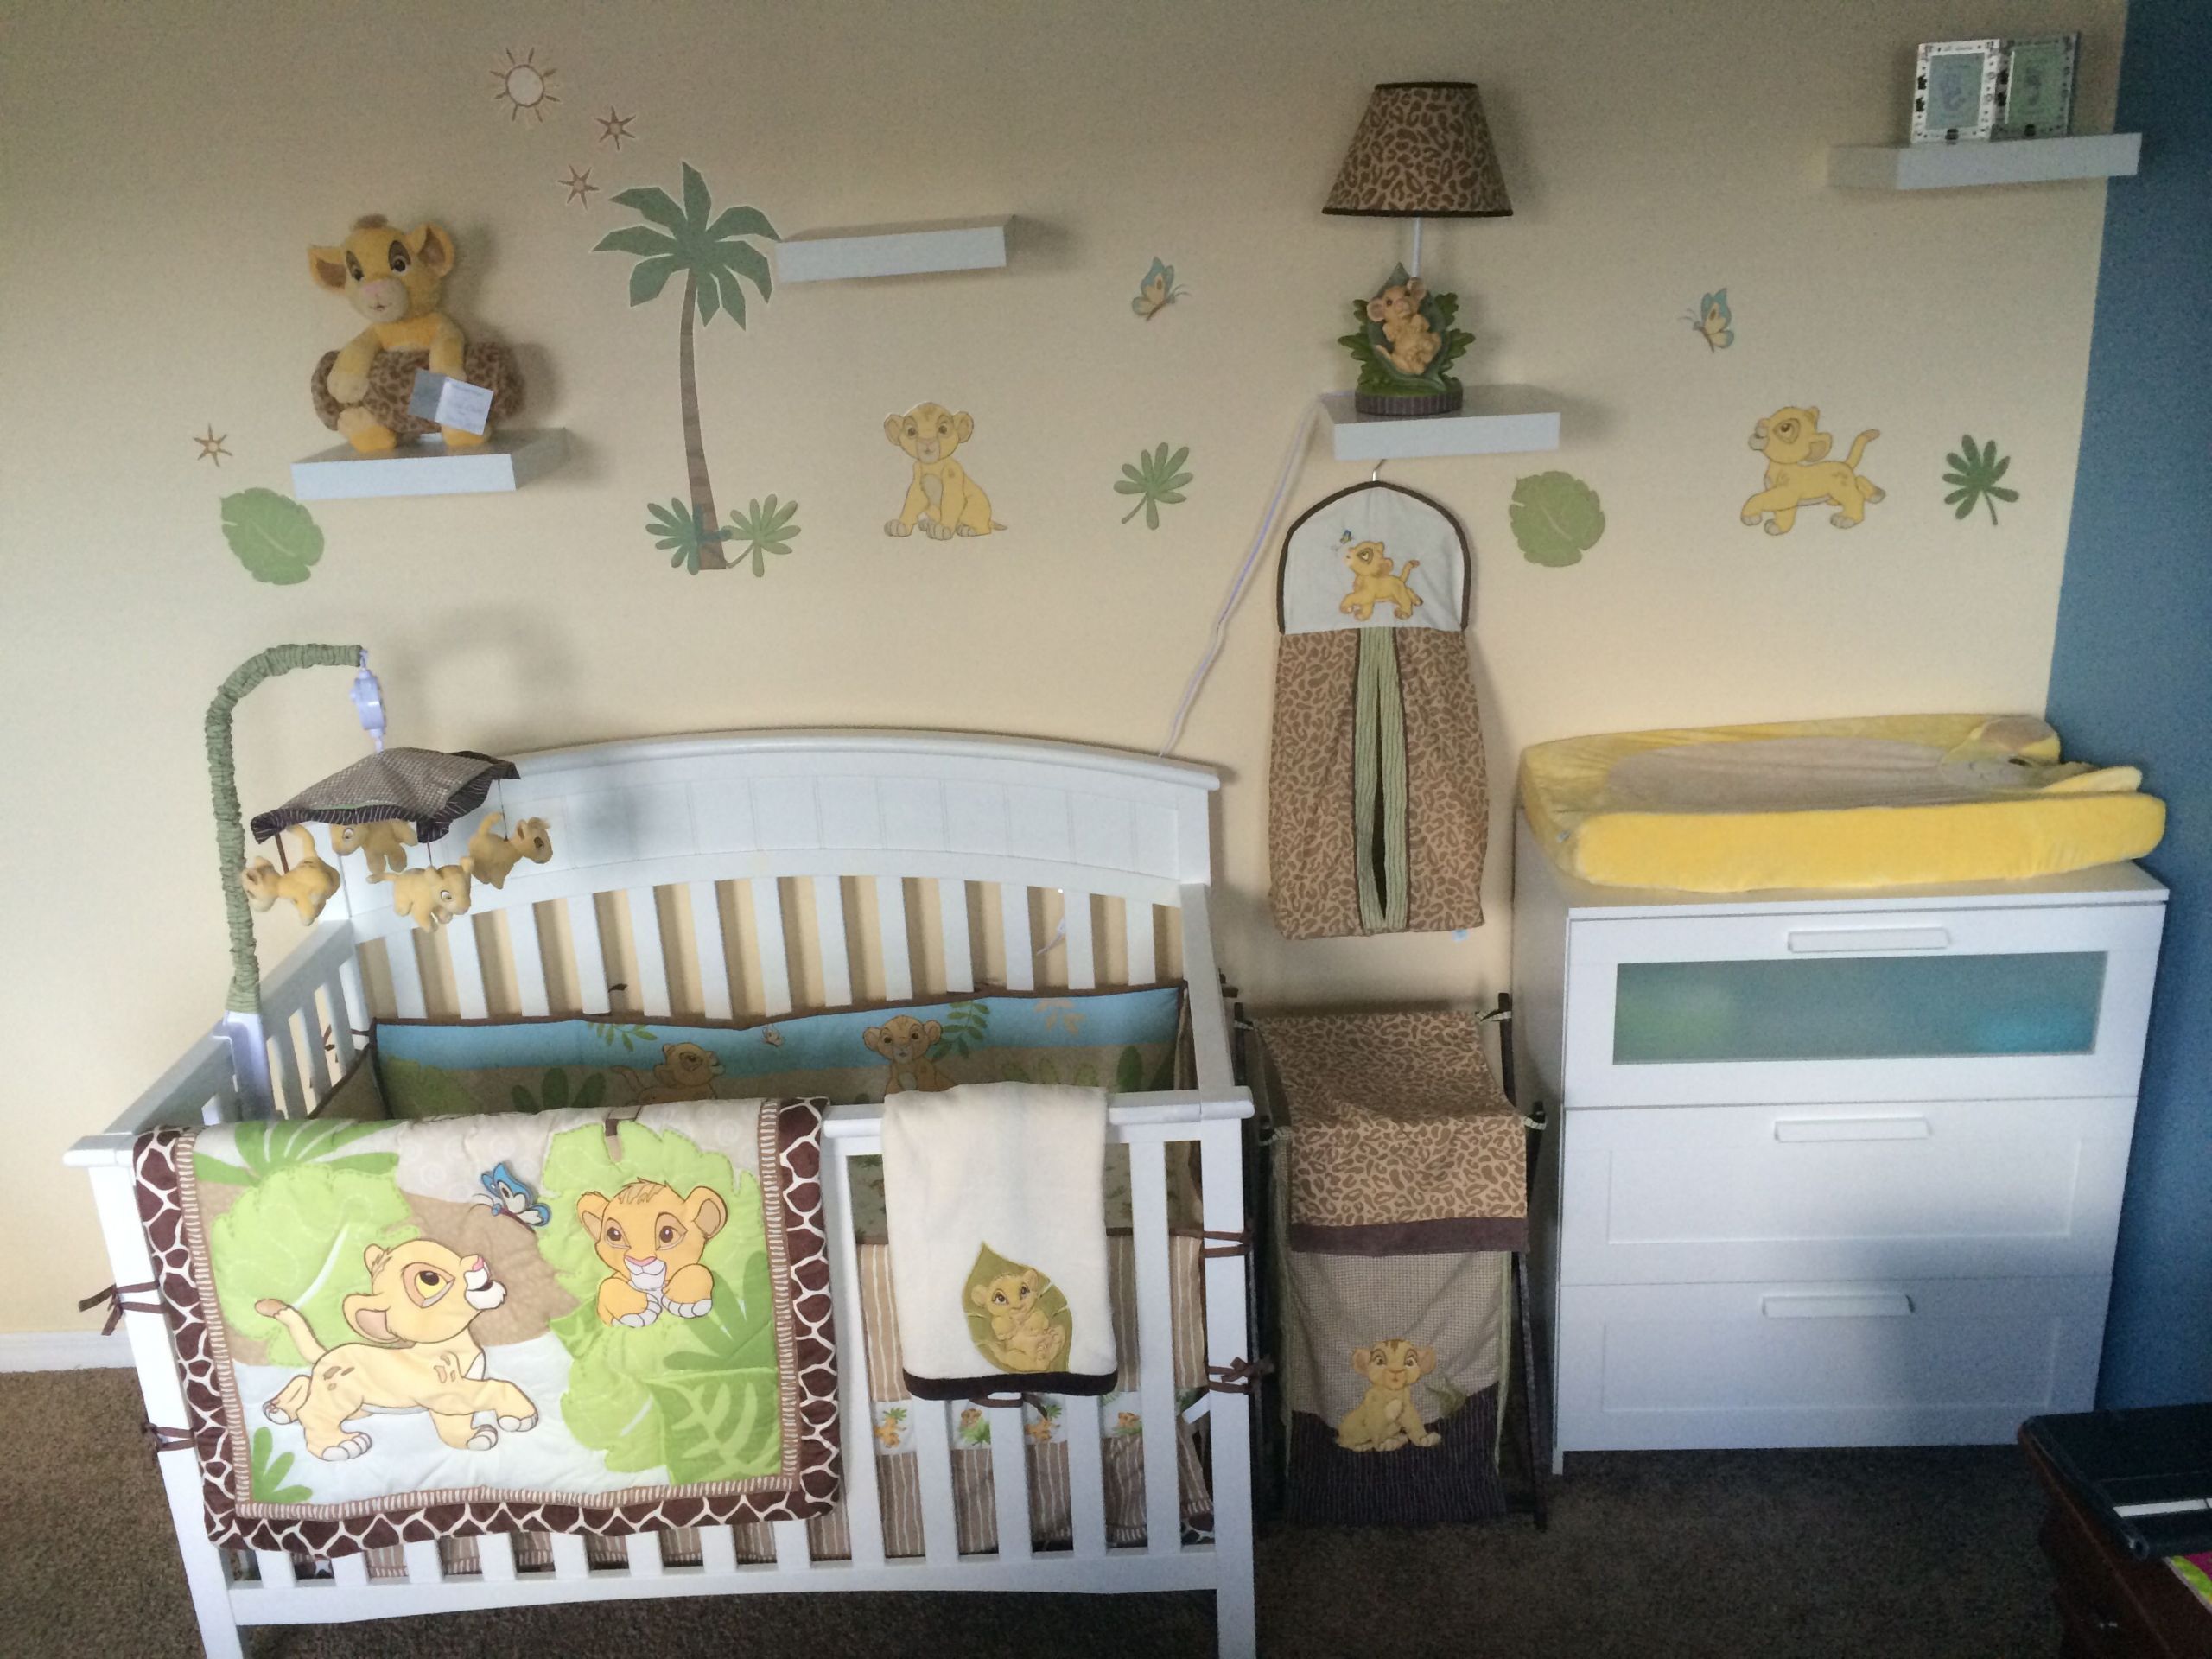 Lion King Baby Room Decor
 The Lion King Nursery